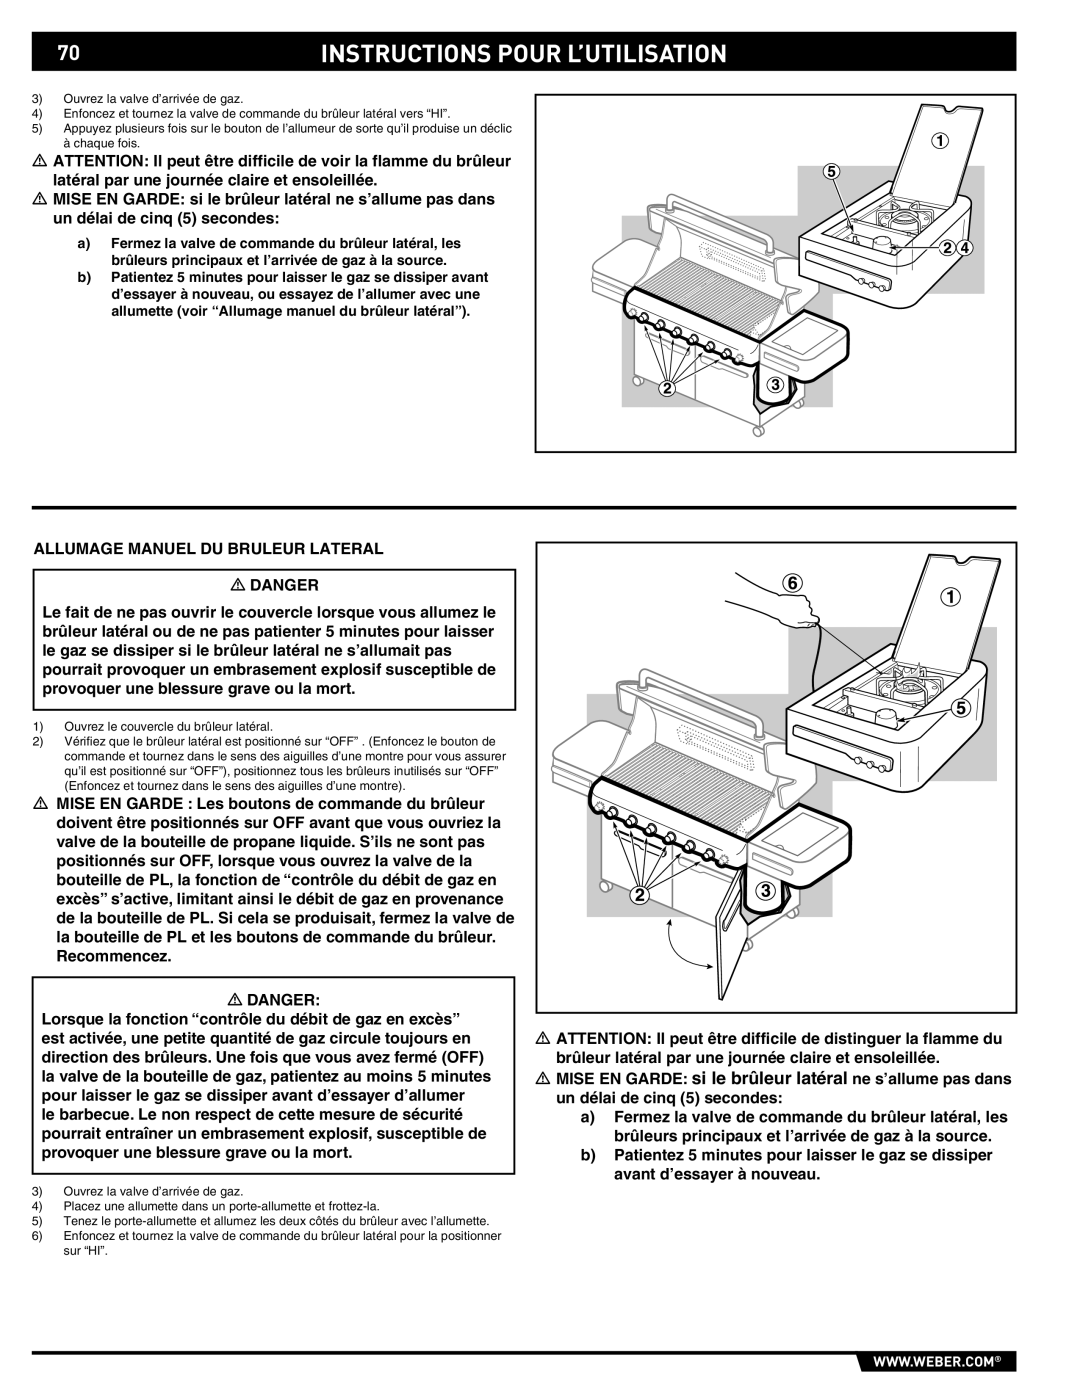 Summit E/S-620/650 manual Allumage Manuel DU Bruleur Lateral 